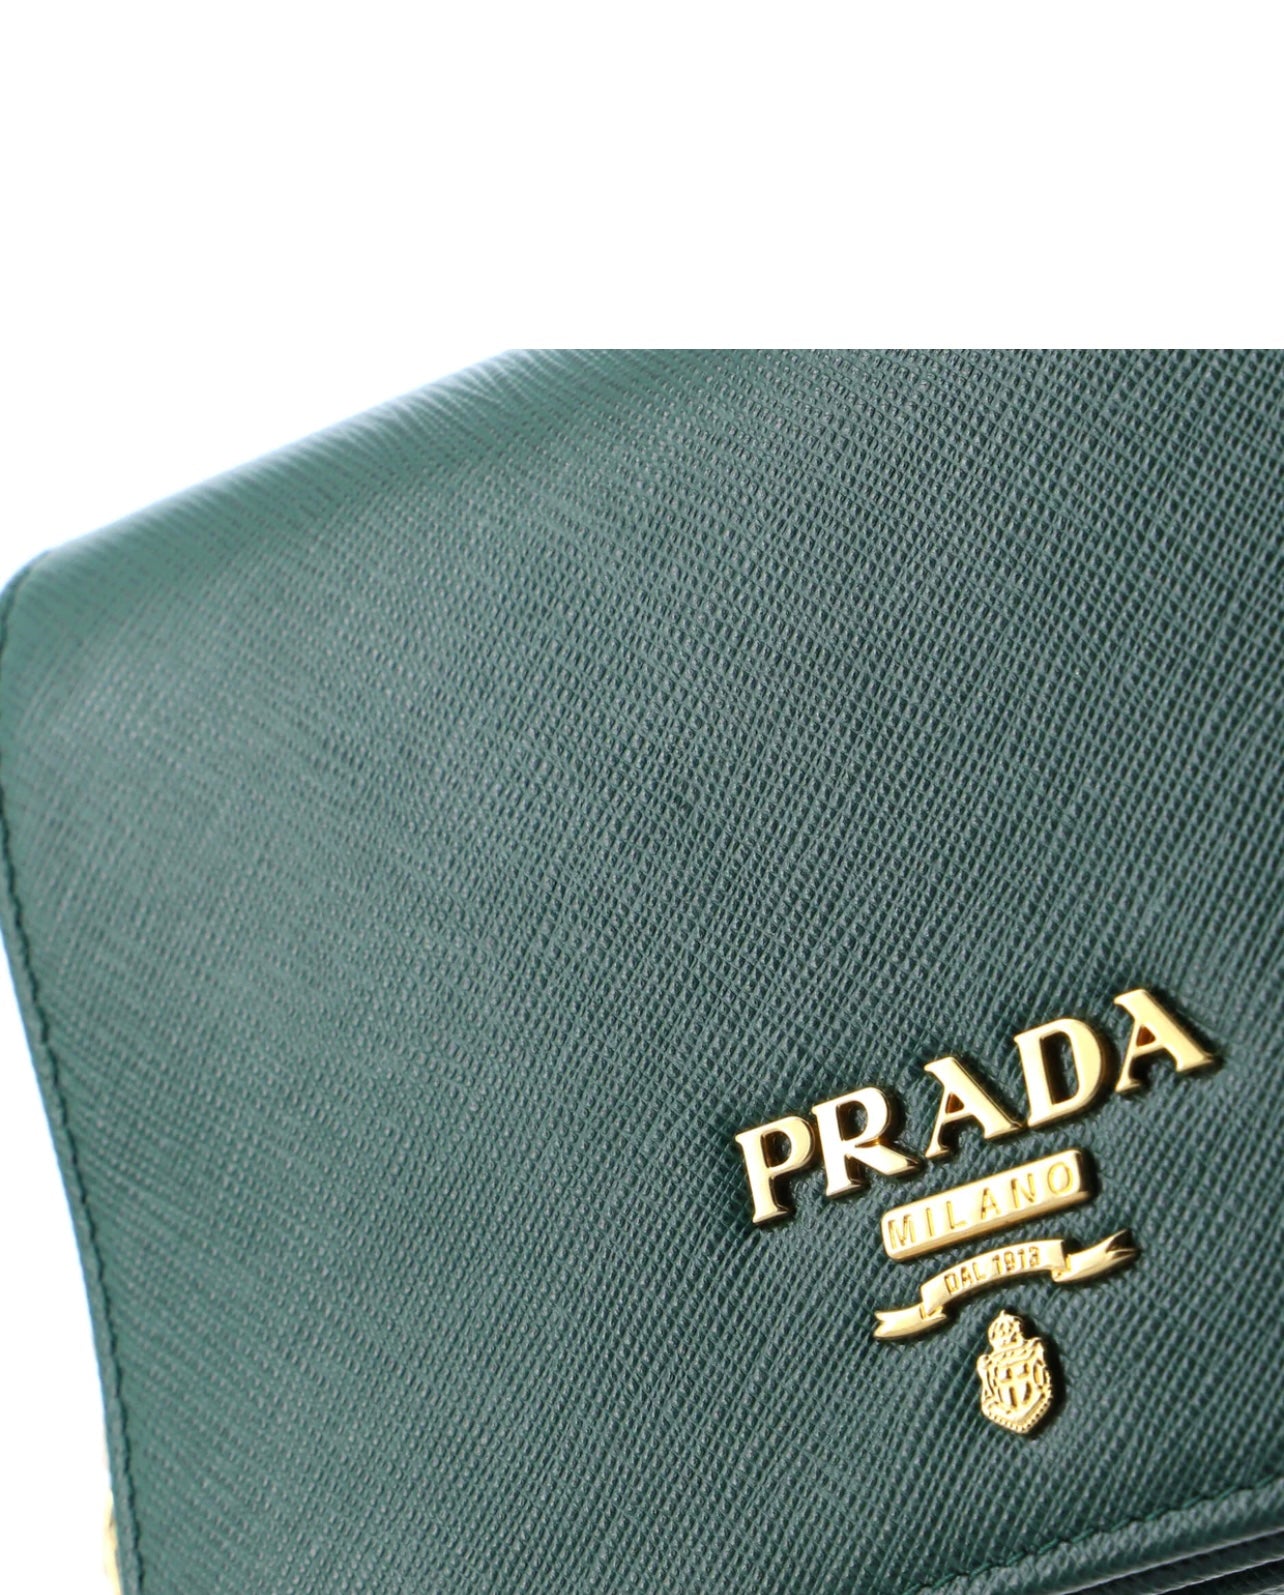 PRADA - Chain Wallet Crossbody Saffiano Leather